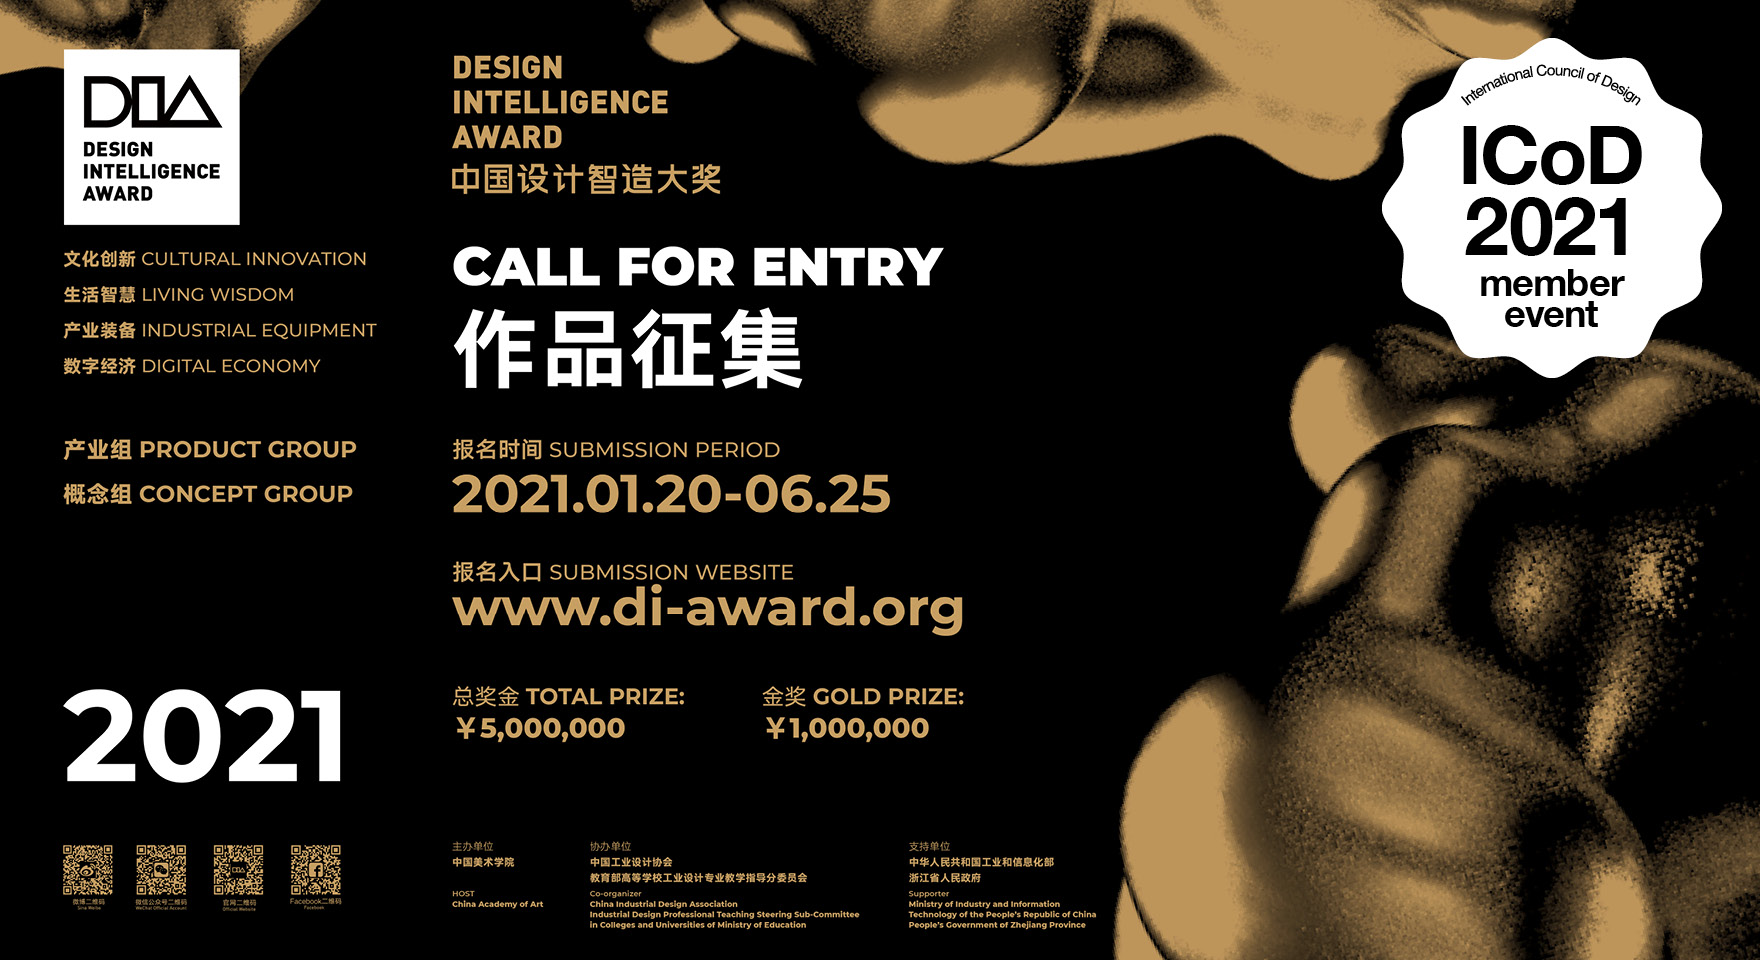 2021 design intelligence award